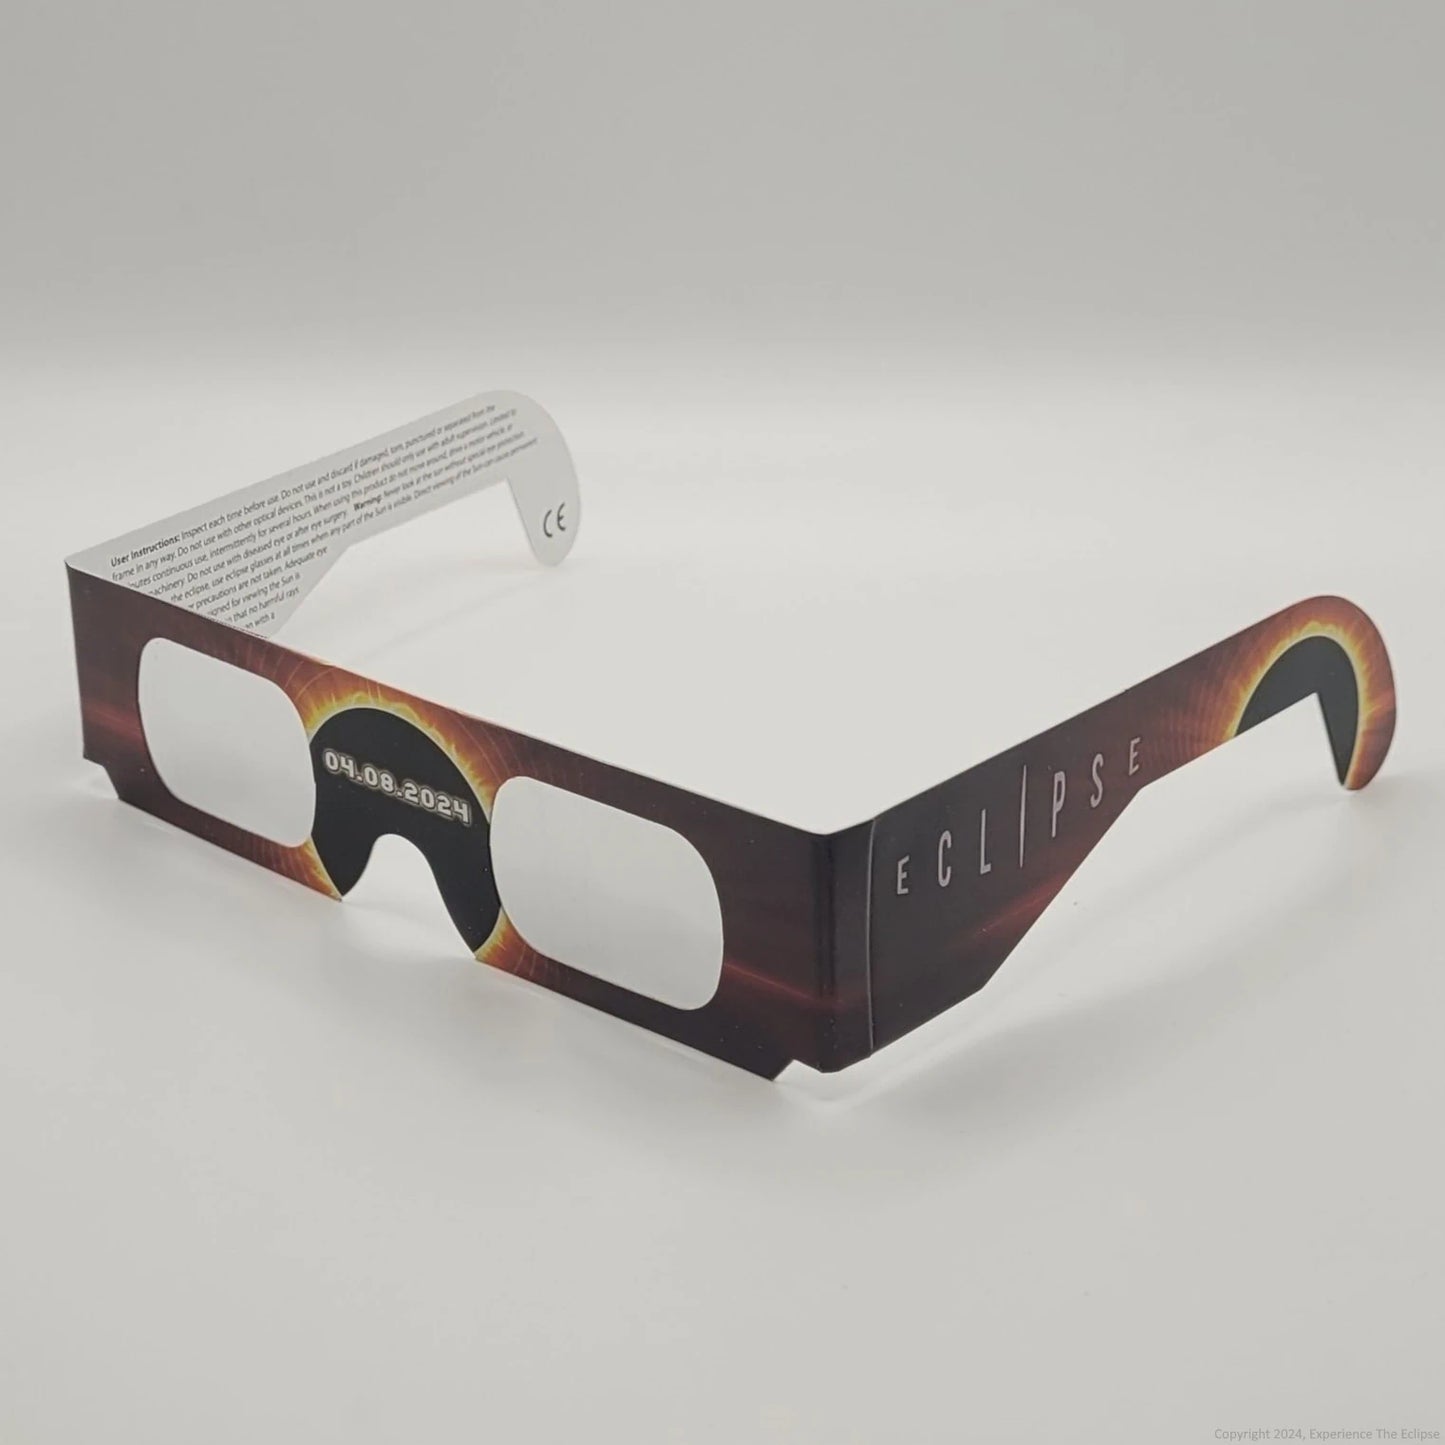 A single pair of orange solar eclipse glasses.